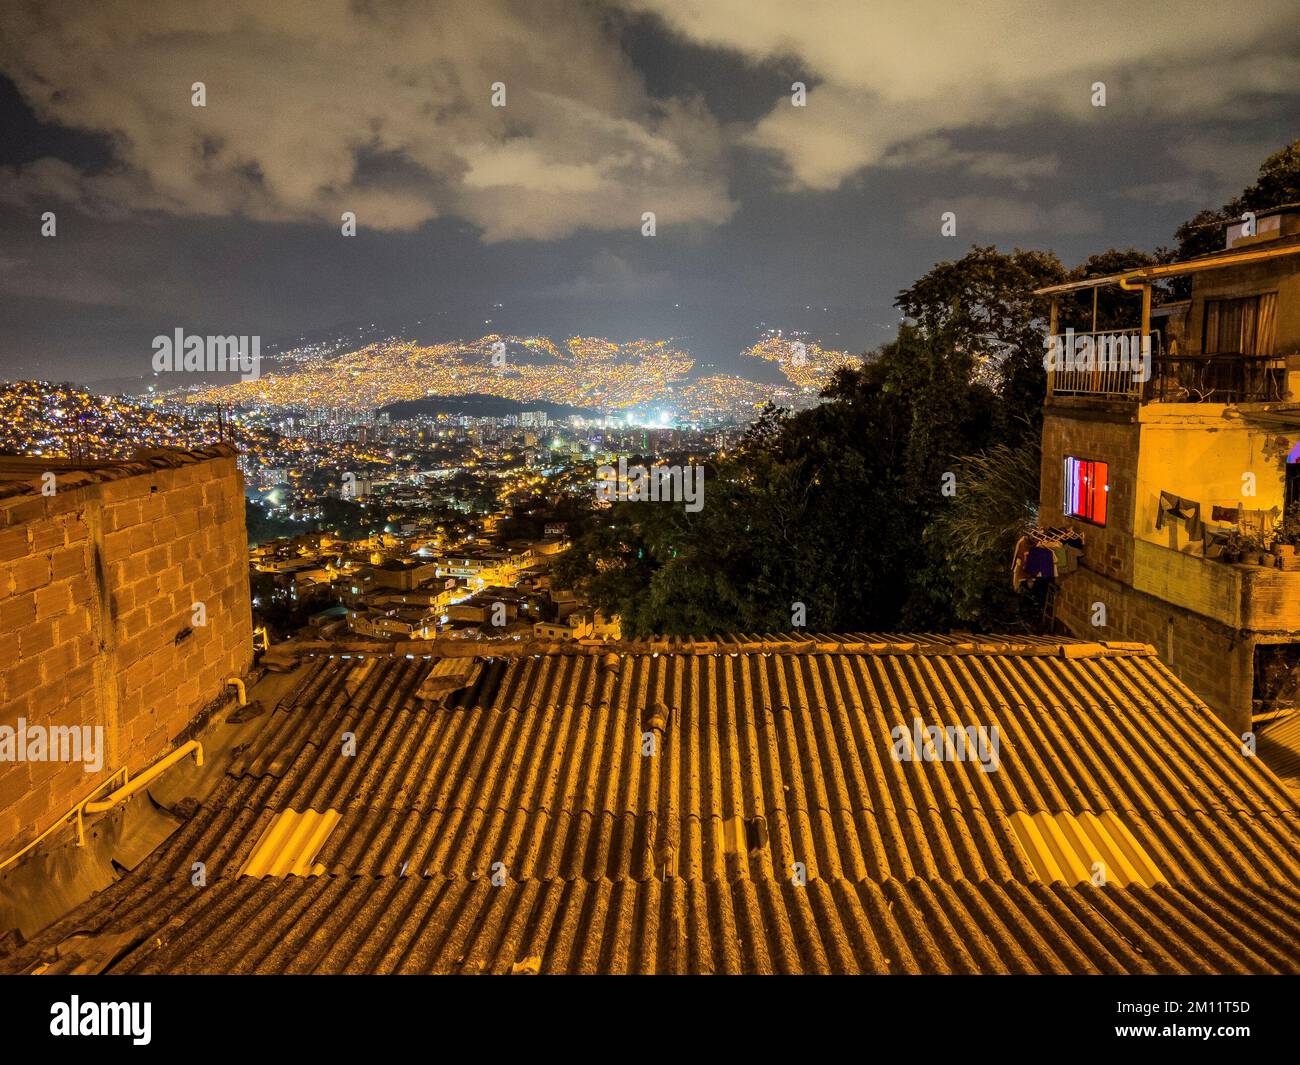 South America, Colombia, Departamento de Antioquia, Medellín, San Javier, Comuna 13, view over the notorious neighborhood Comuna 13 in the evening Stock Photo